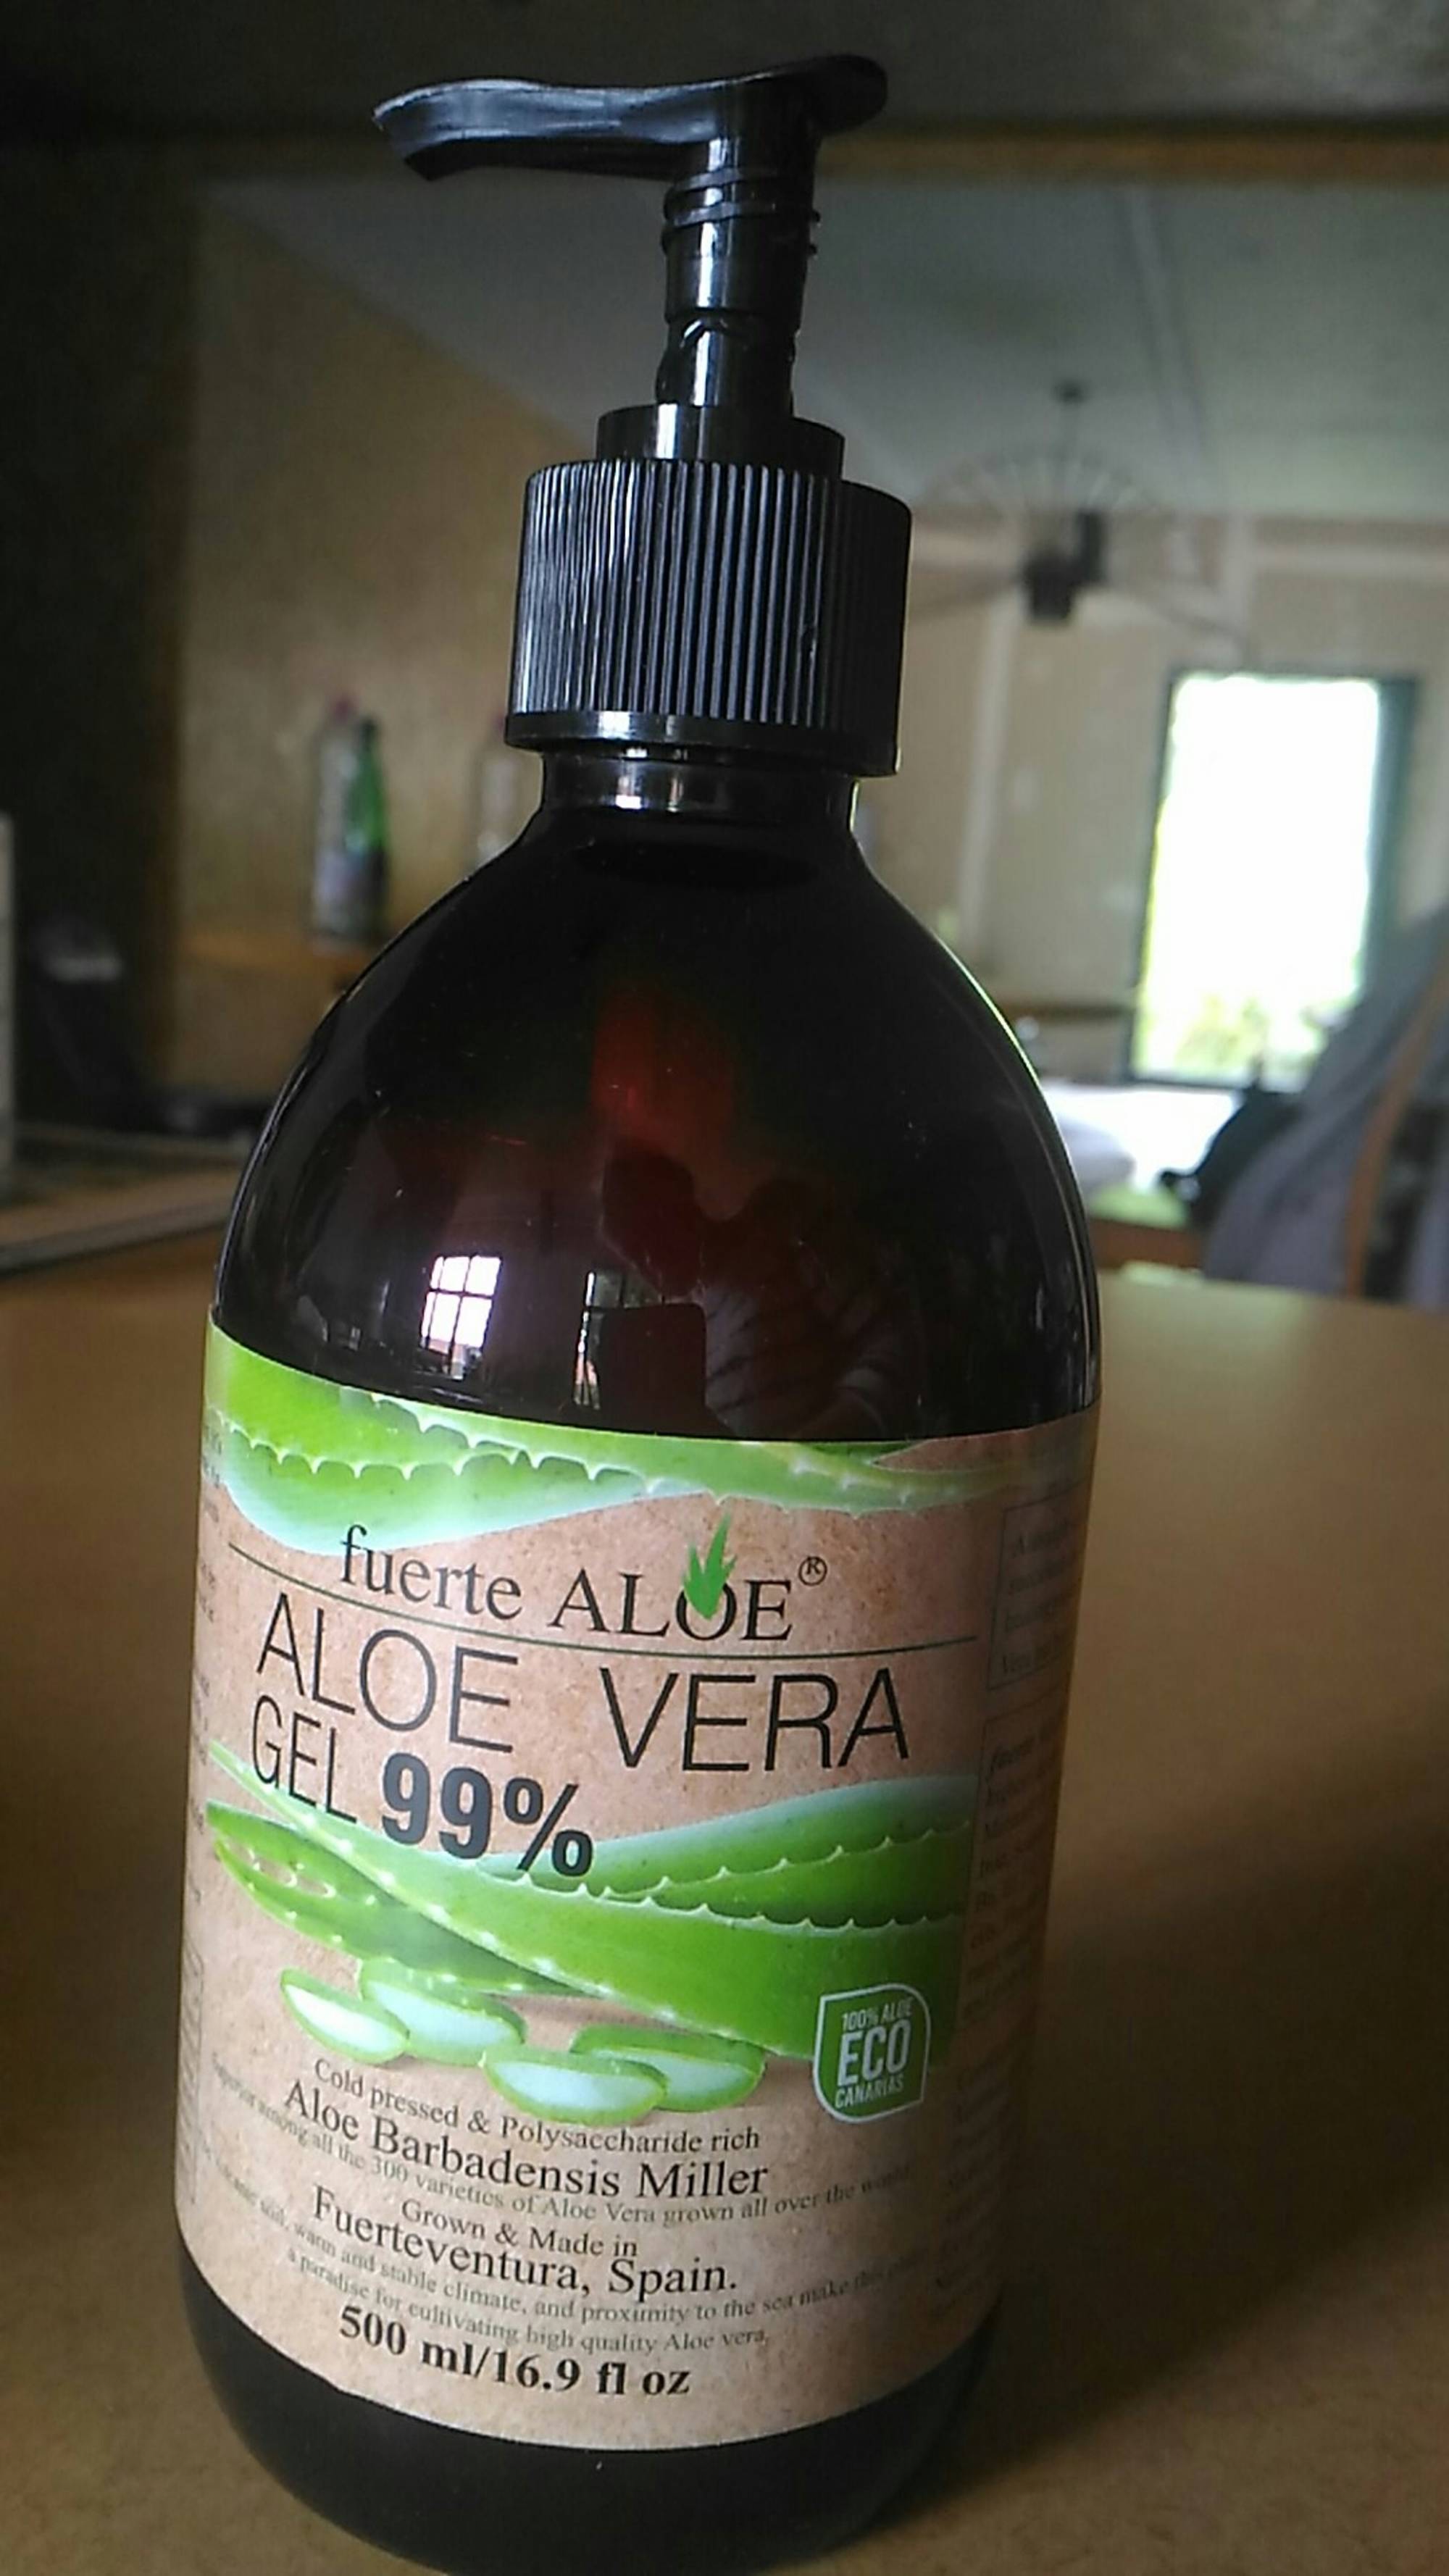 FUERTE ALOE - Aloe vera gel 99%